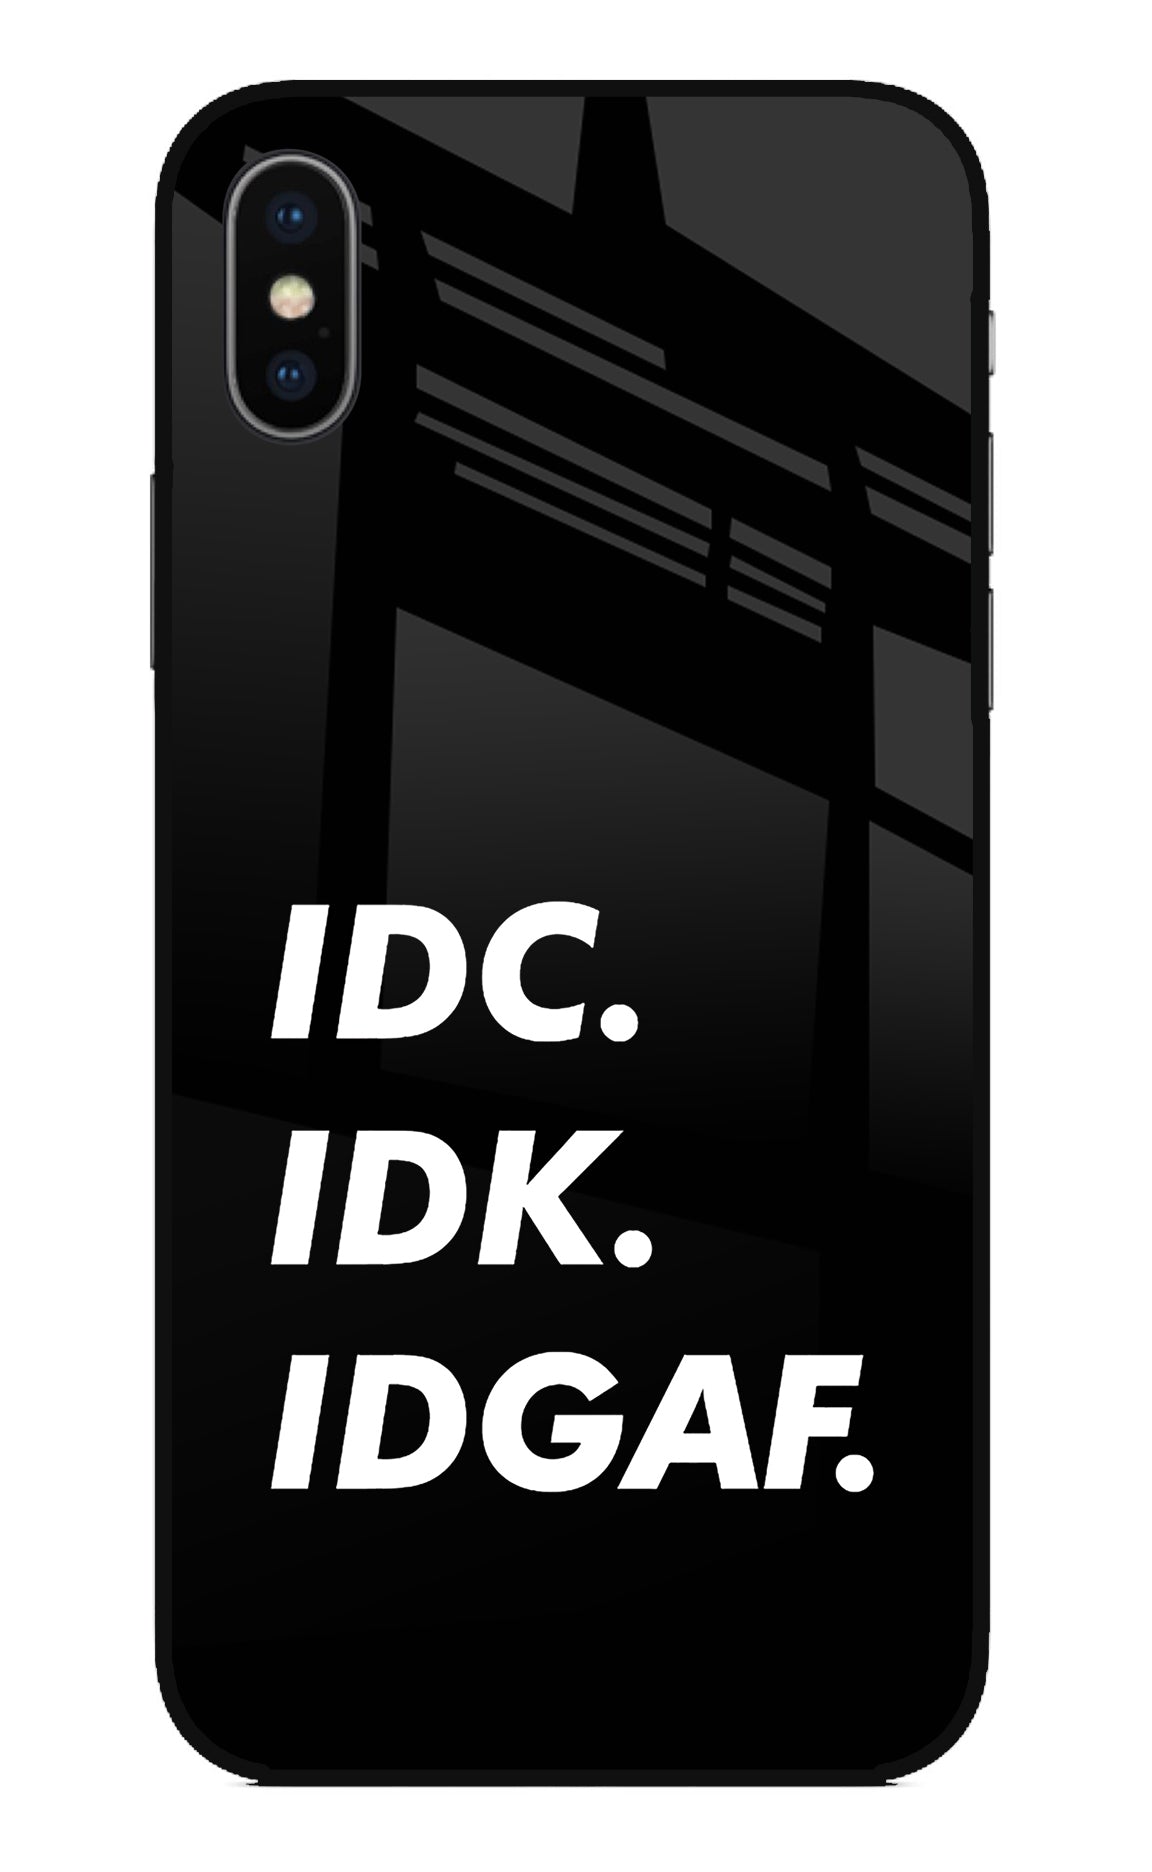 Idc Idk Idgaf iPhone X Back Cover